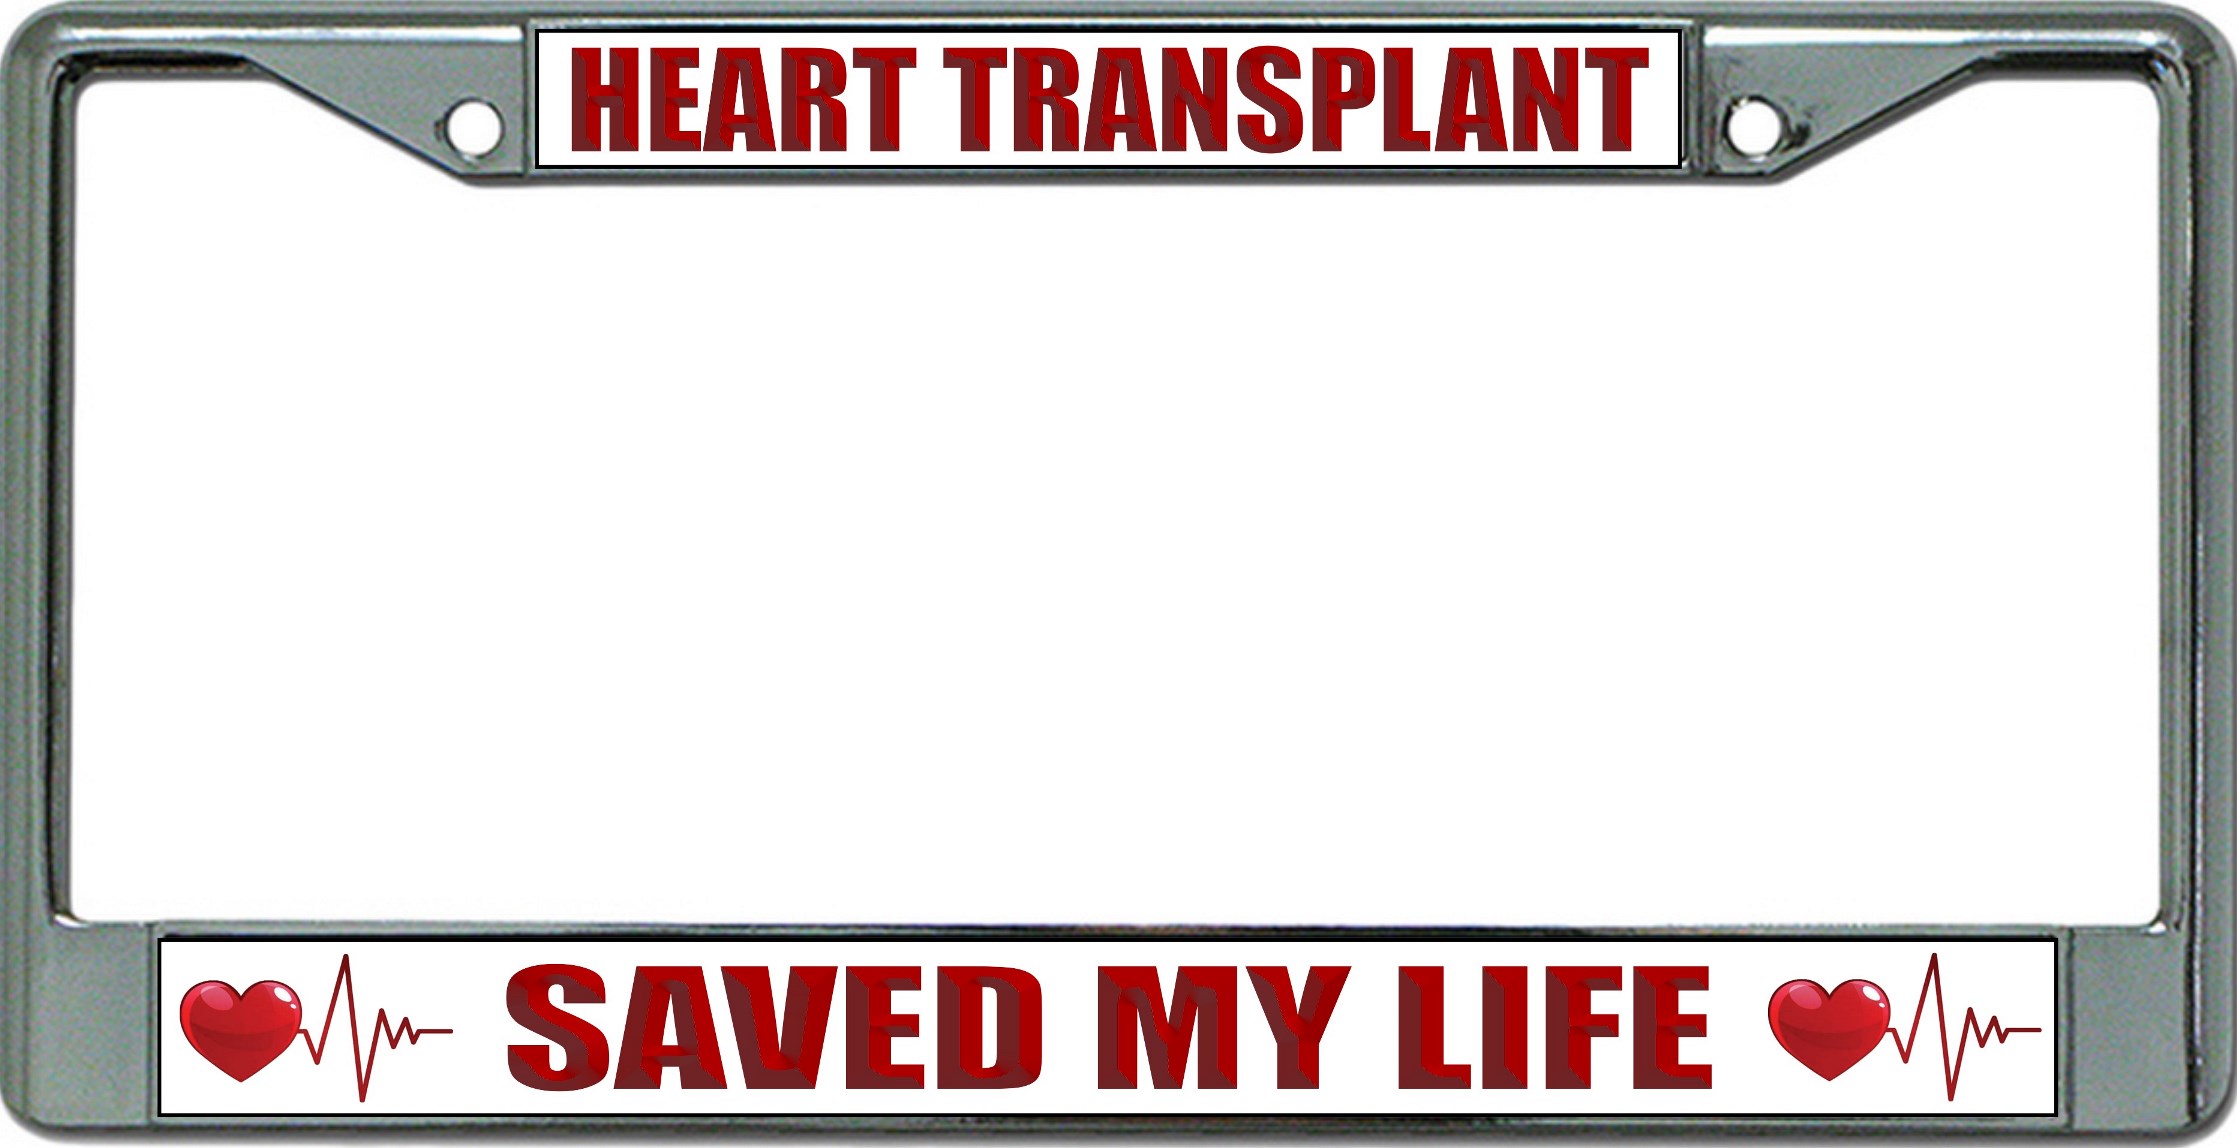 Heart Transplant Saved My Life Chrome License Plate FRAME